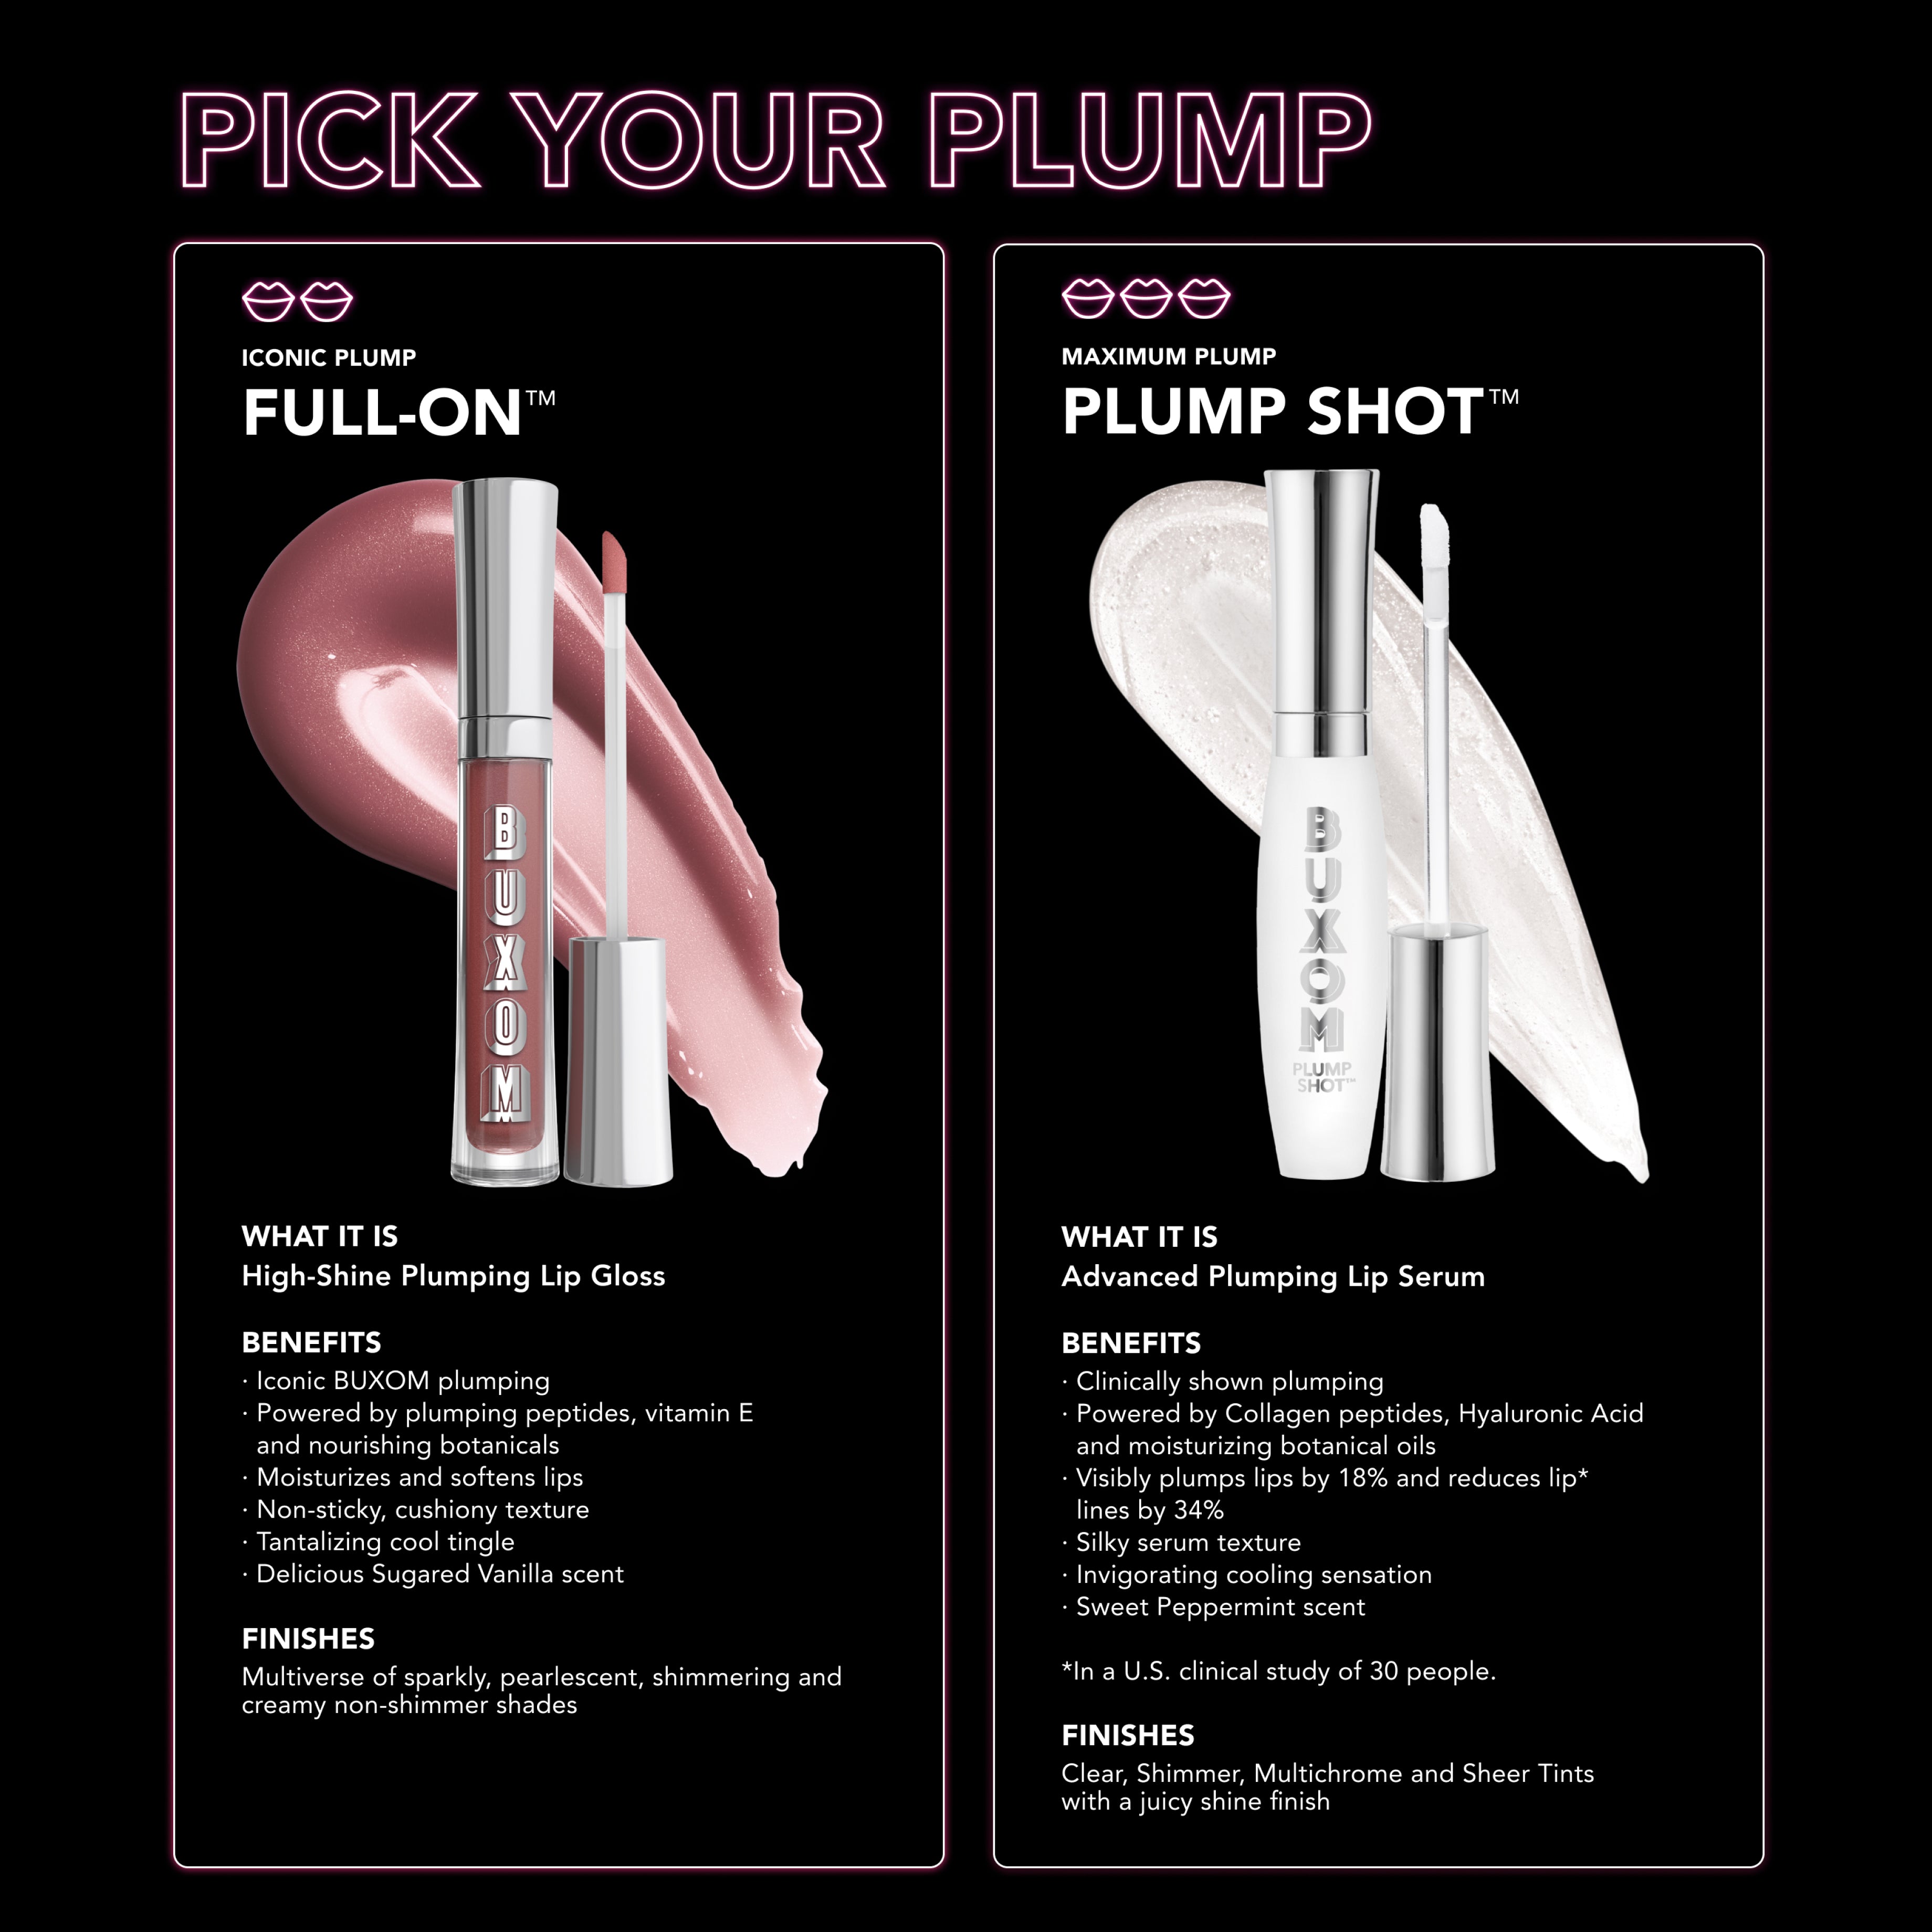 Plump Shot™ Lip Serum